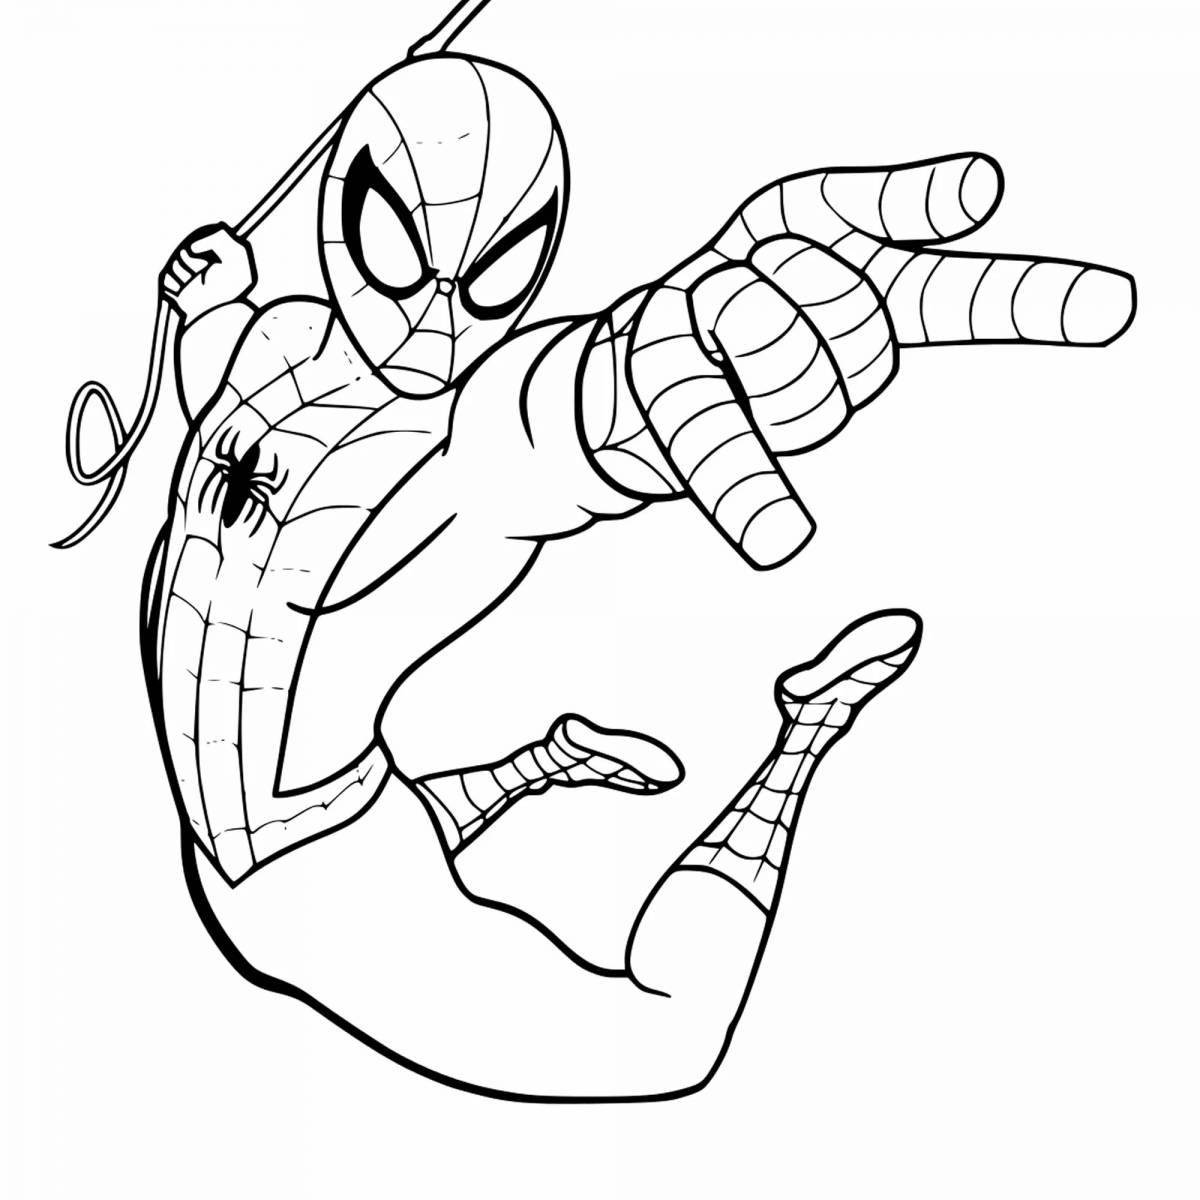 Spider-Man fun team coloring page